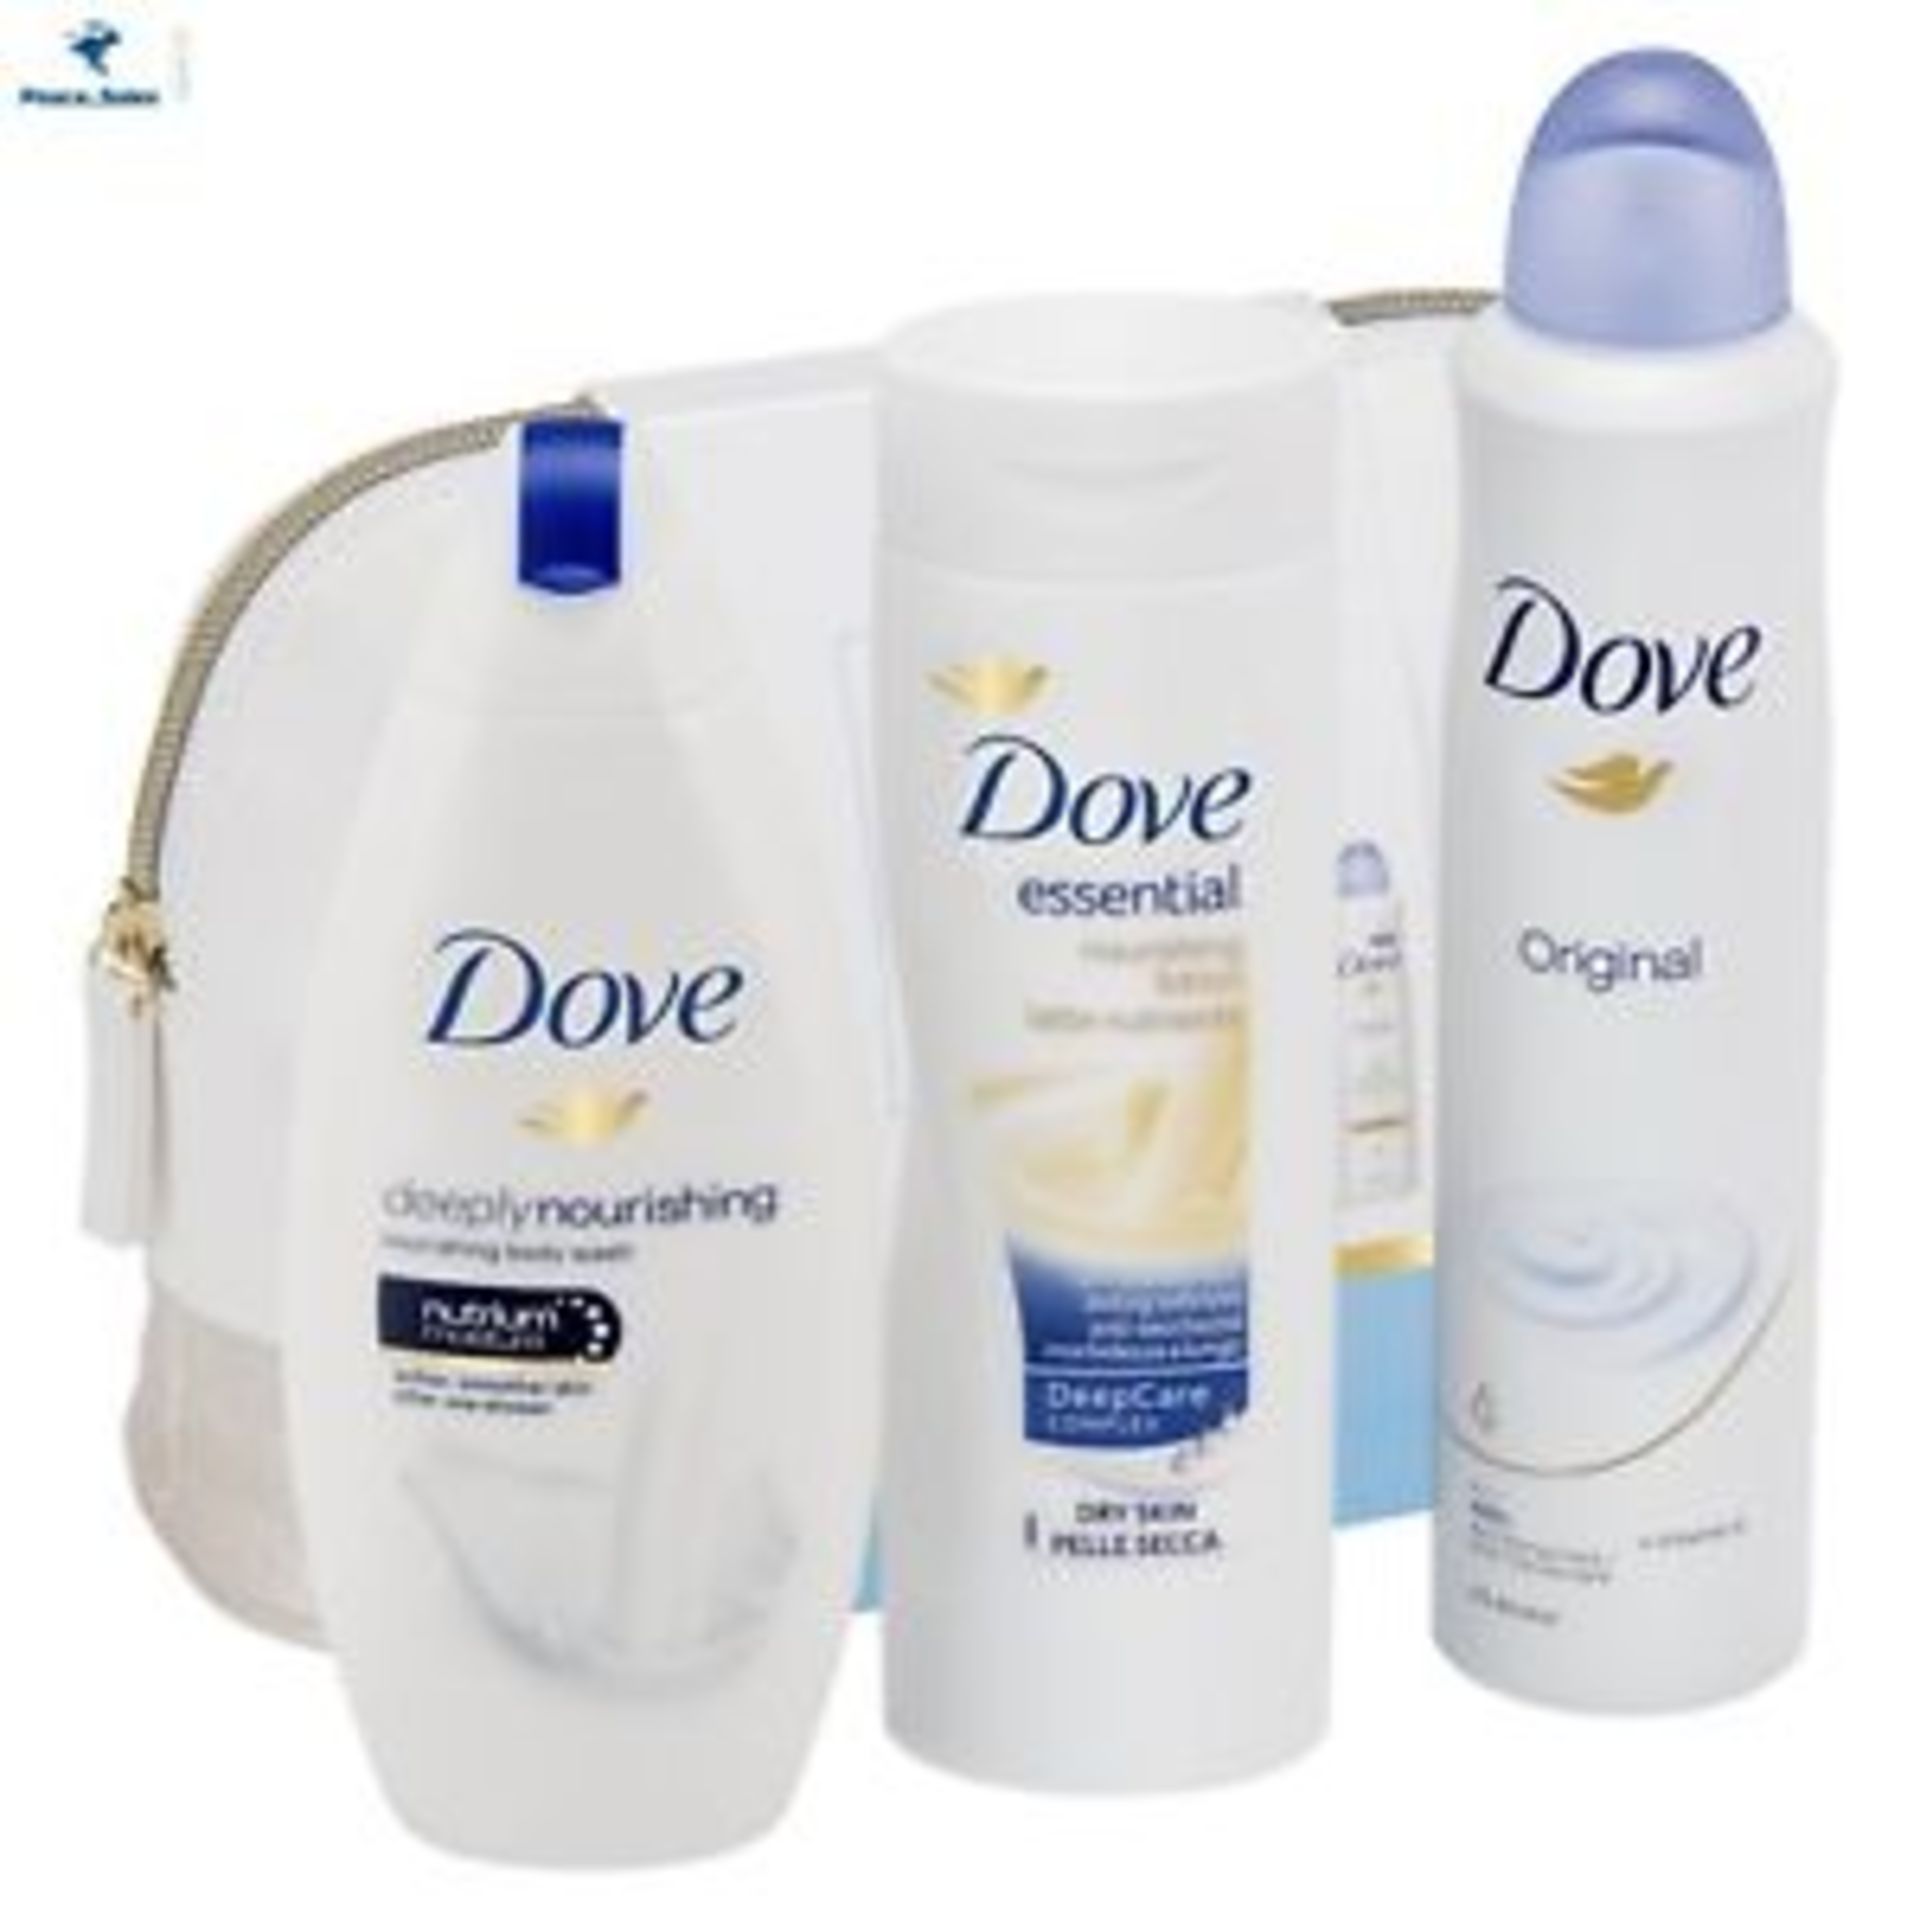 V Brand New Dove Beauty Collection Washbag Gift Set Inc 250ml Nourishing Body Wash - 250ml Essential